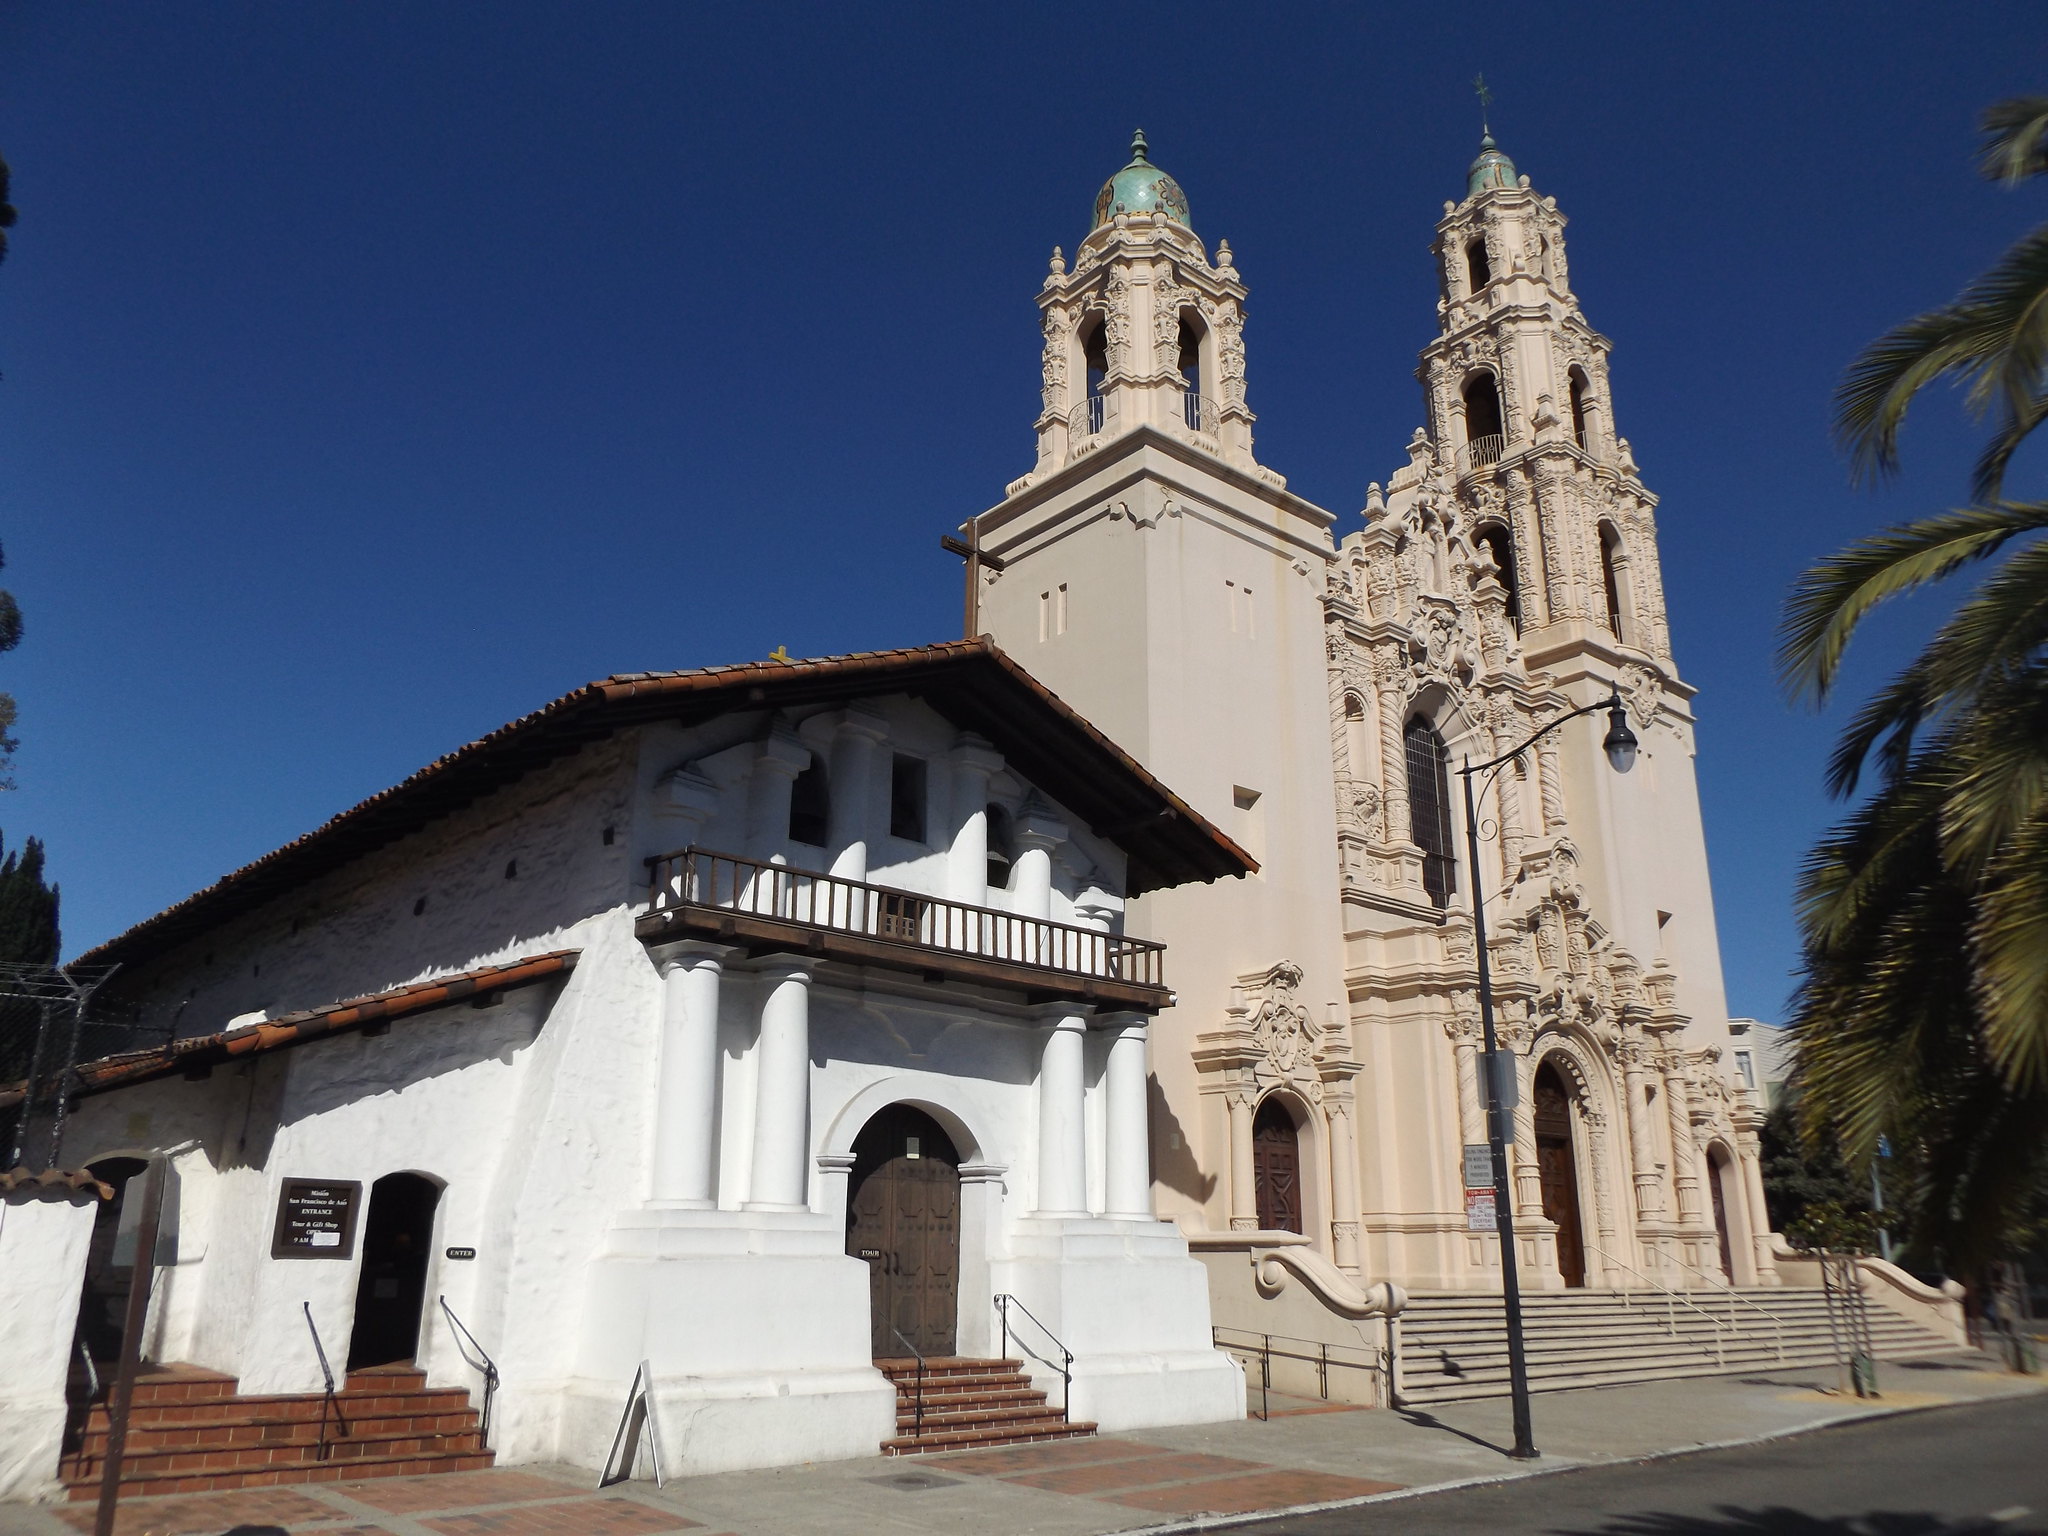 Mission Dolores Old Church and Basilica, San Francisco, California, USA, 8 September 2018